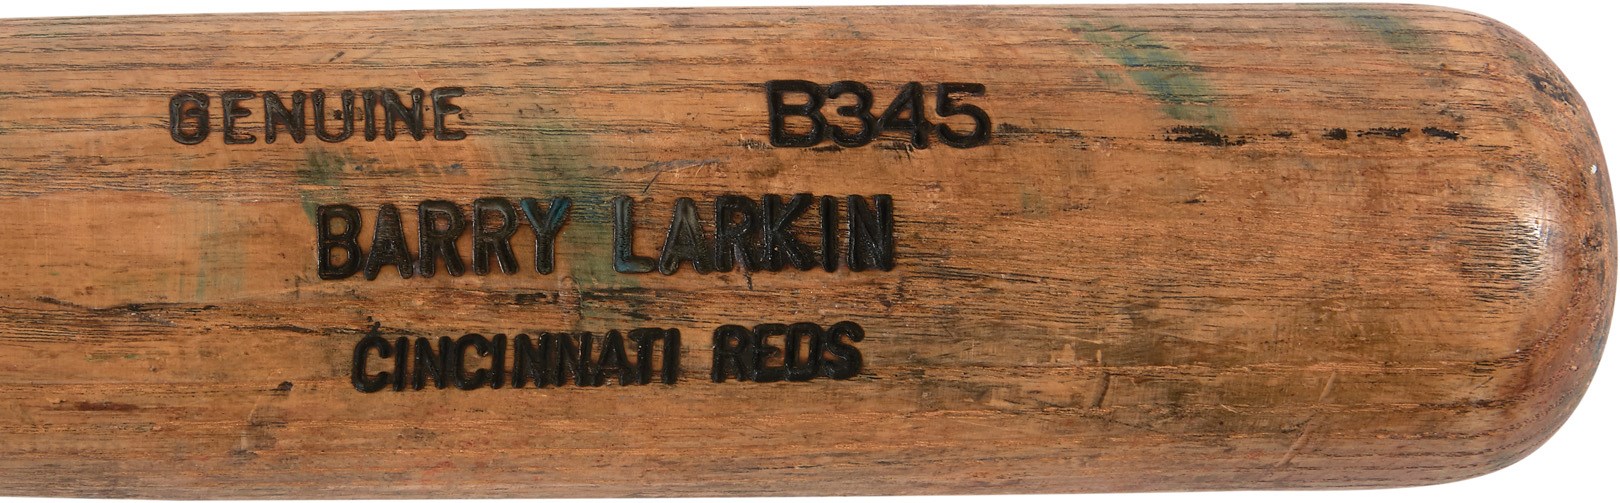 - 2003-04 Barry Larkin Game Used Reds Bat (PSA GU 10)